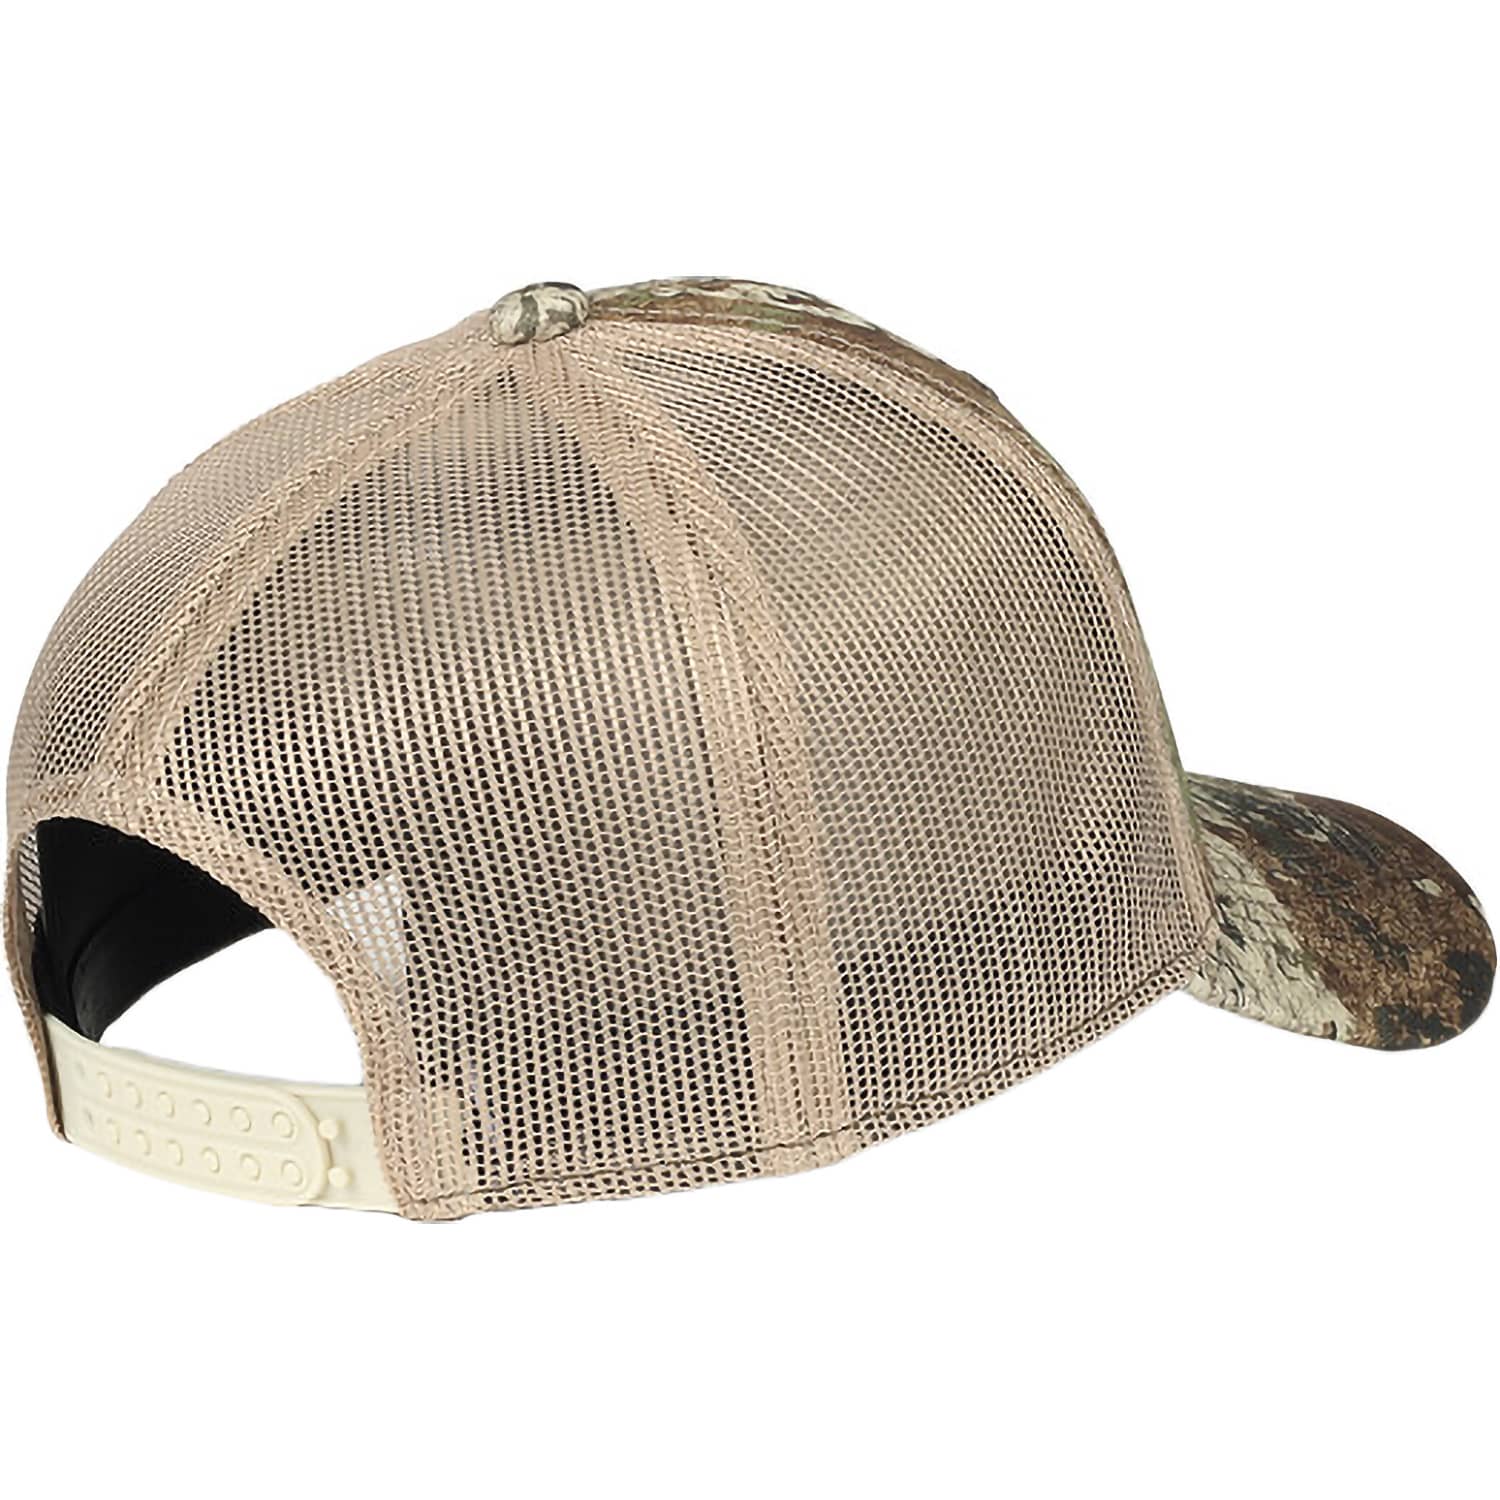 Cabelas Gray 60% Wool Cap Hat Baseball Style. EUC